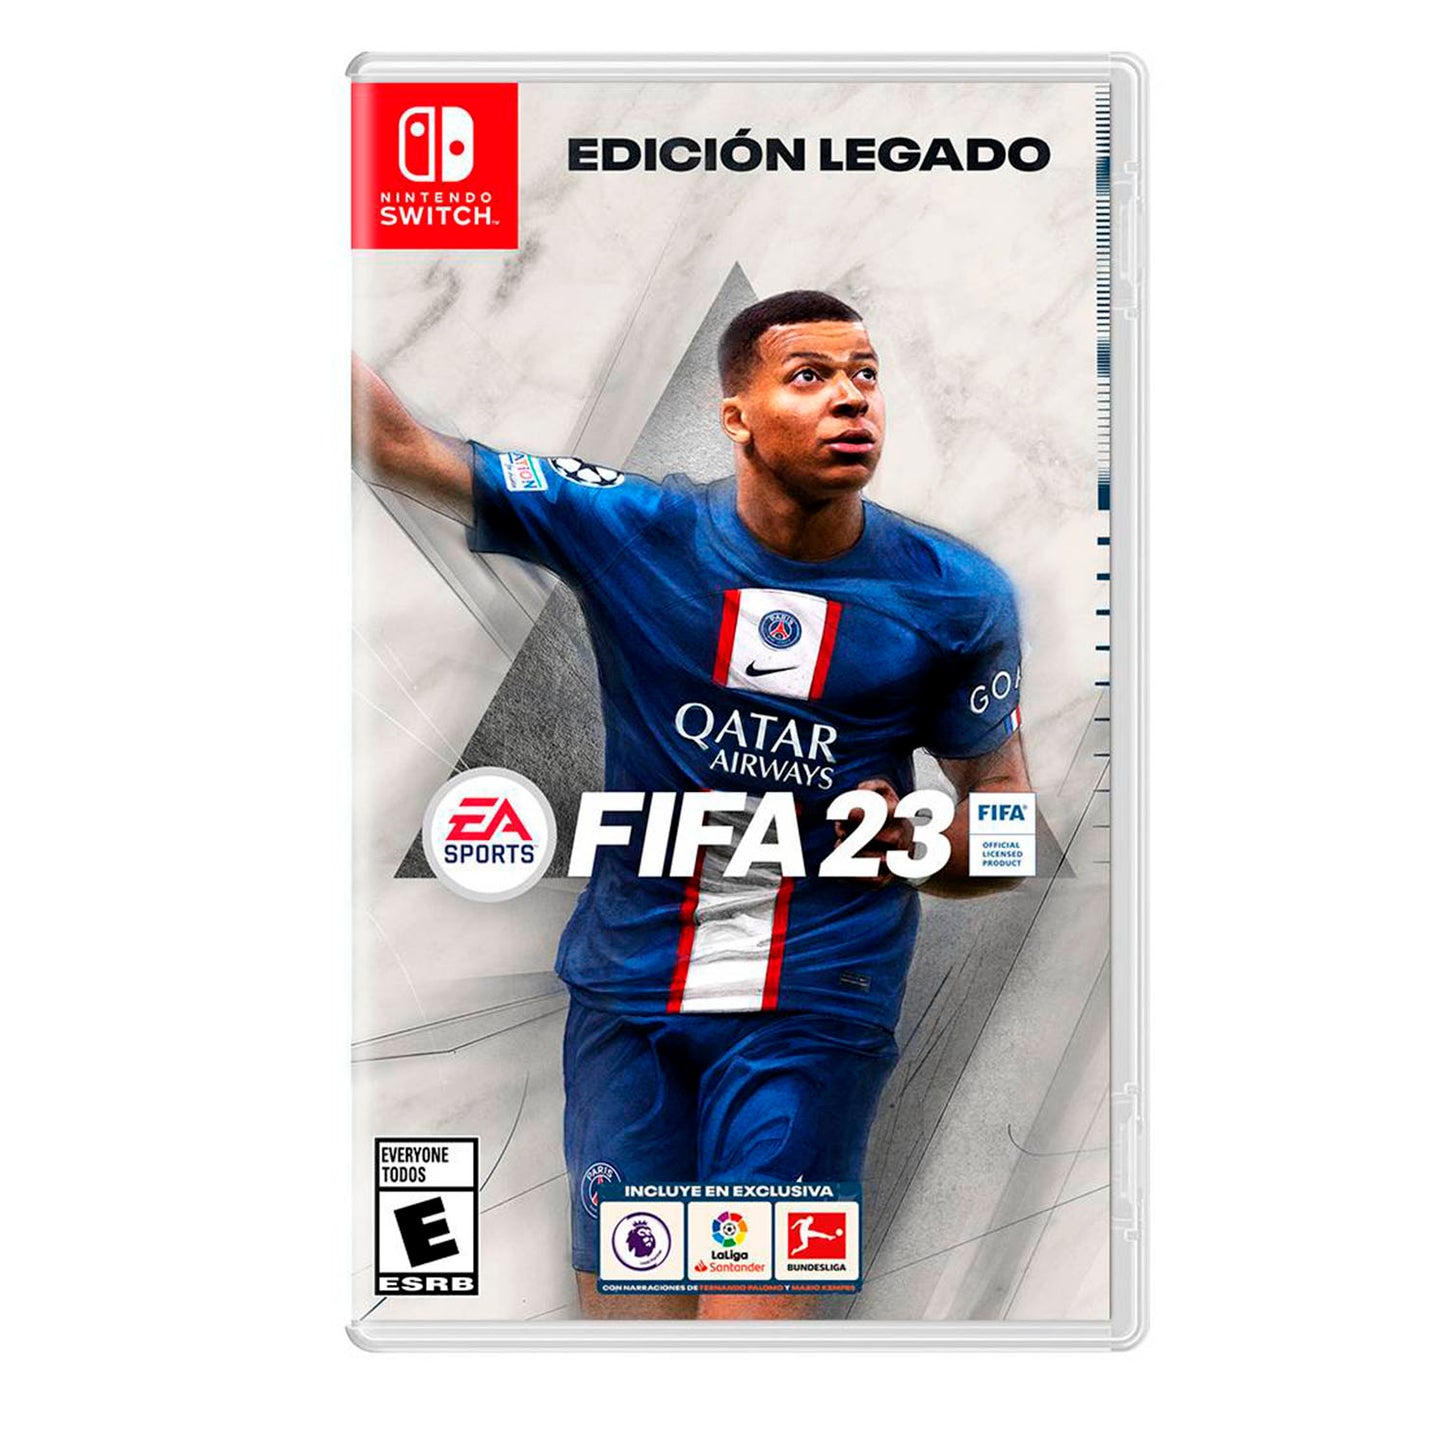 Fifa 23 Legacy Edition Nintendo Switch